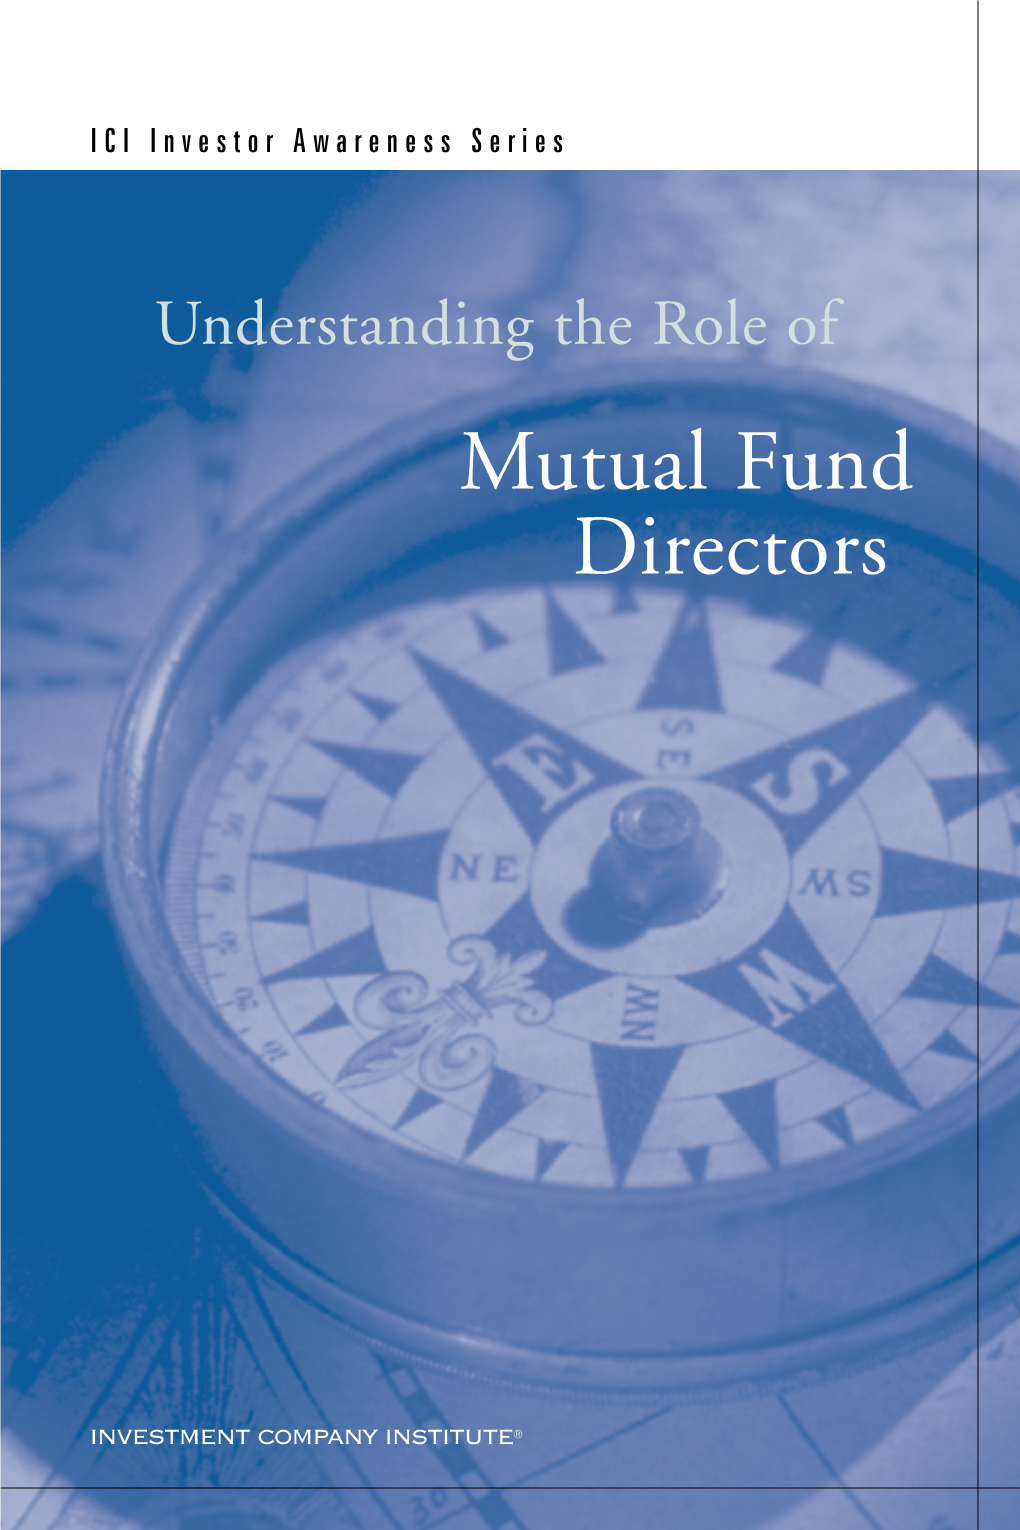 Mutual Fund Directors